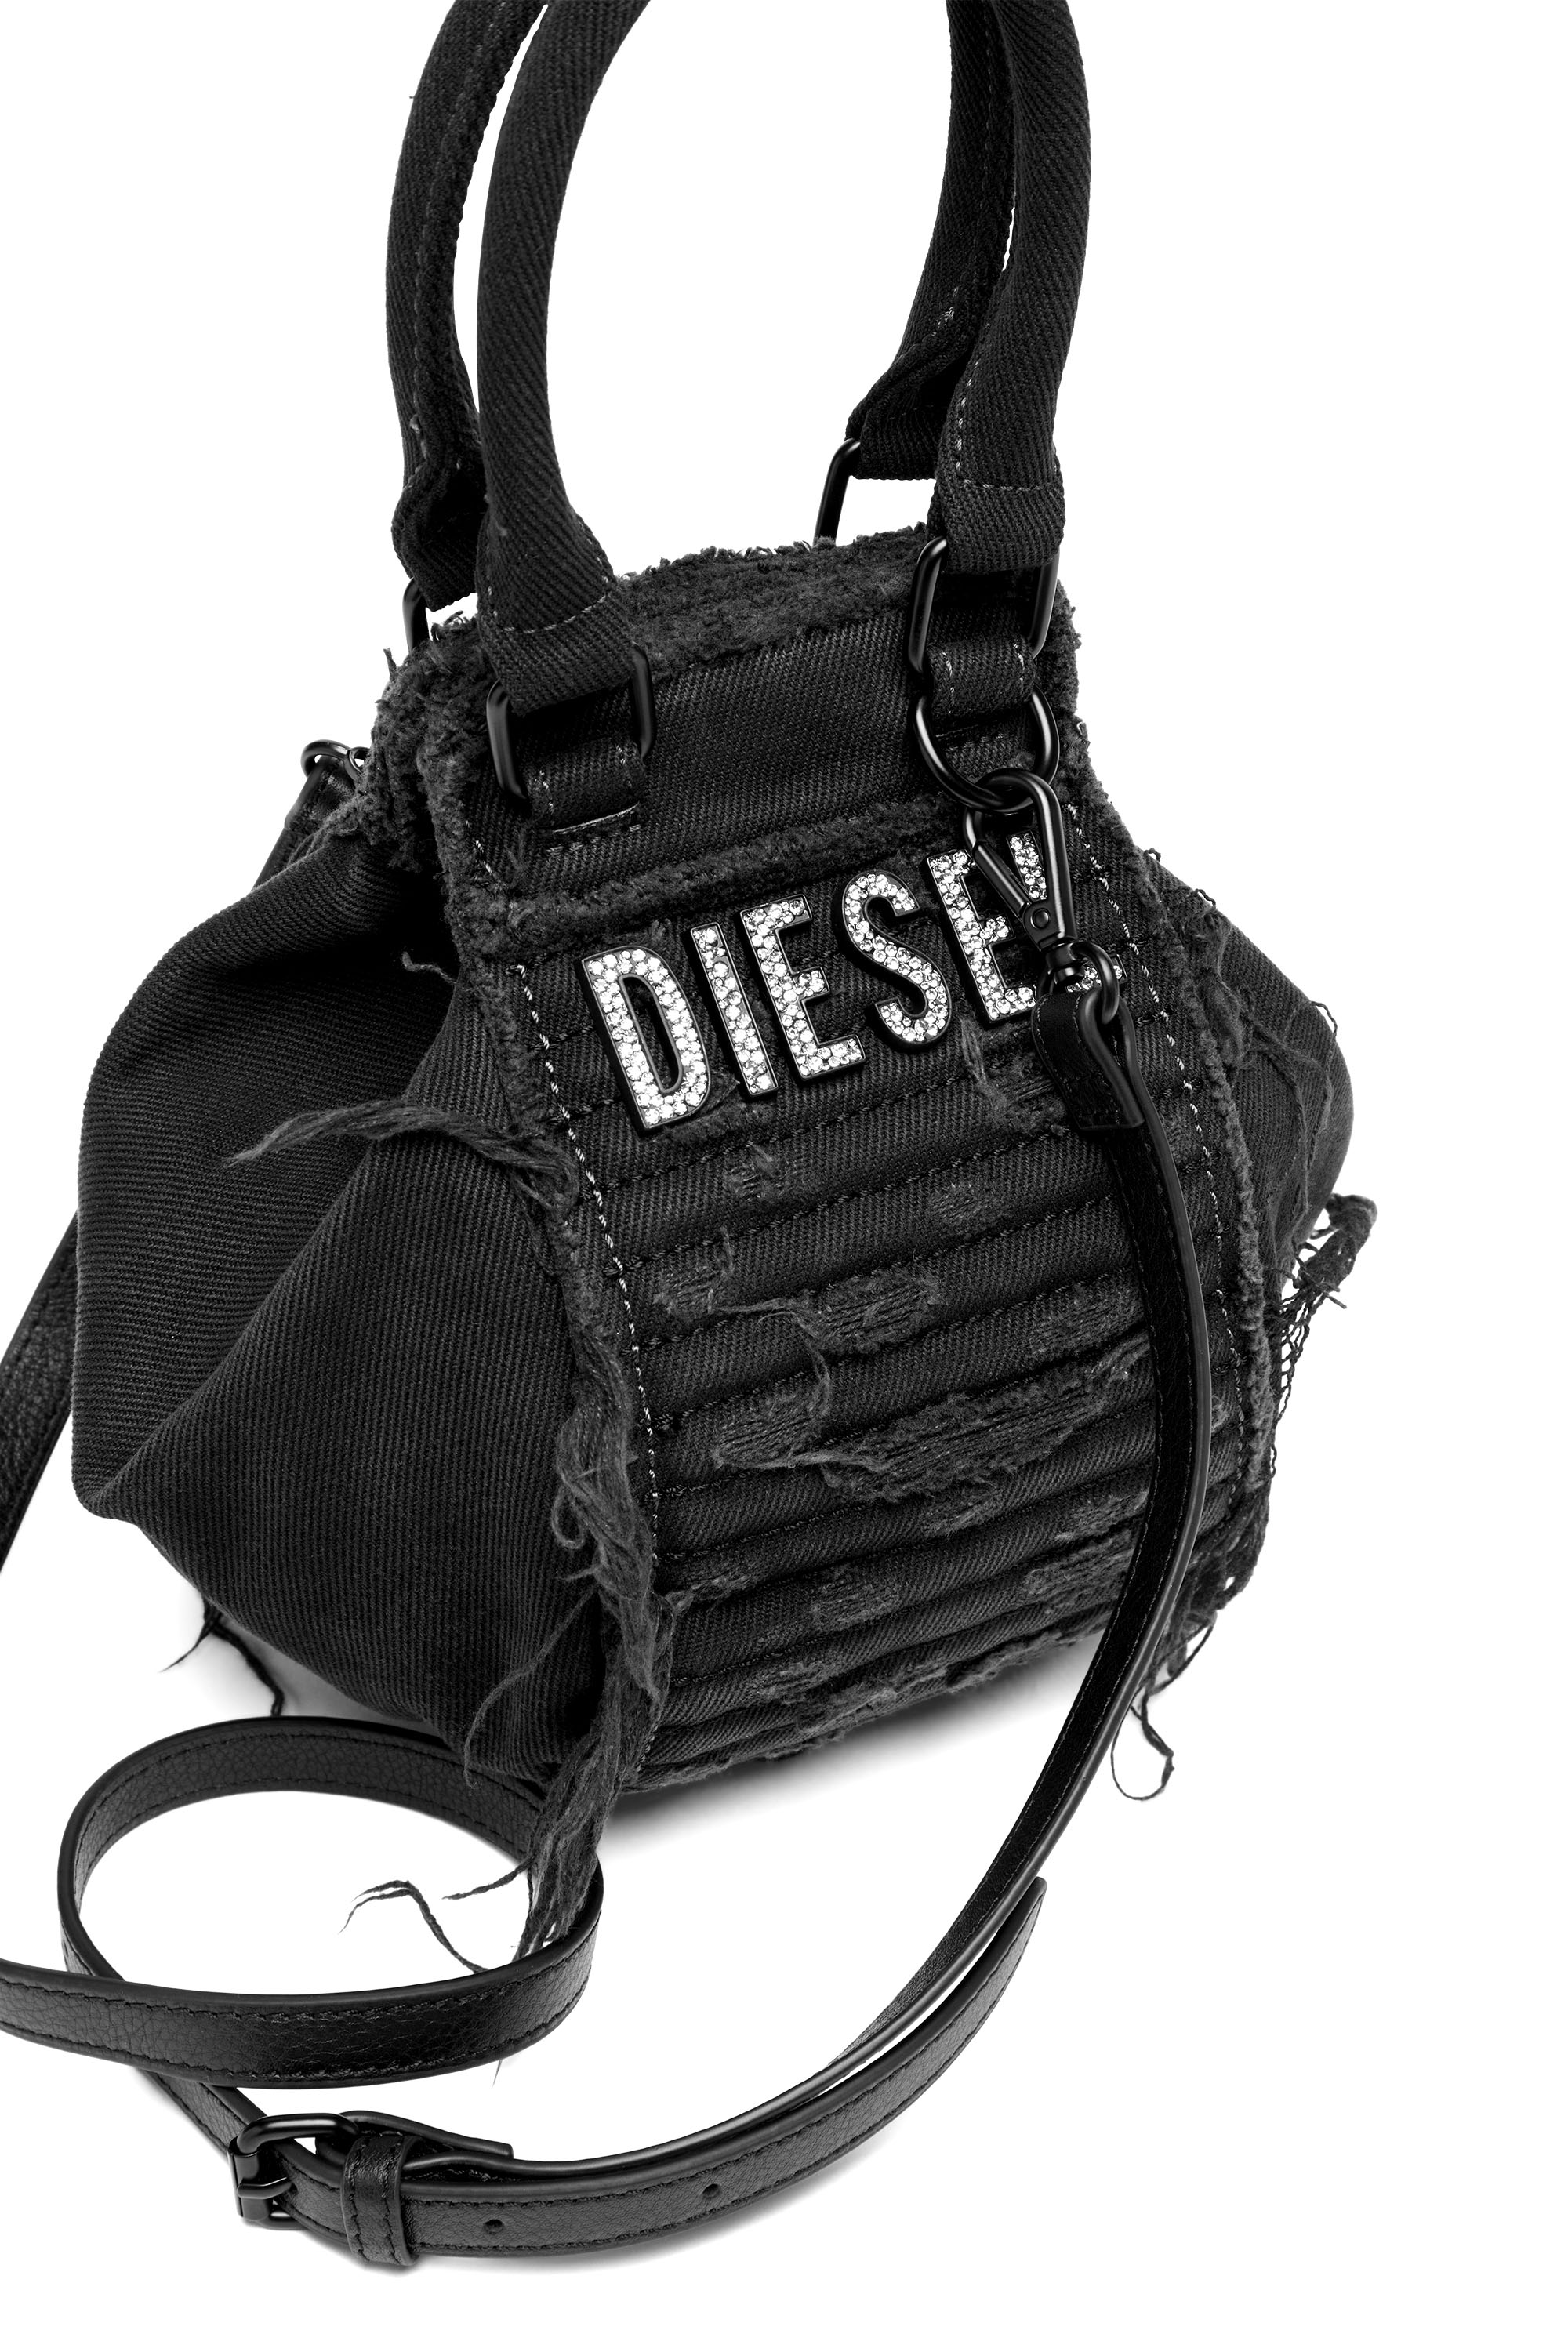 Diesel - D-VINA-C XS, Black - Image 5